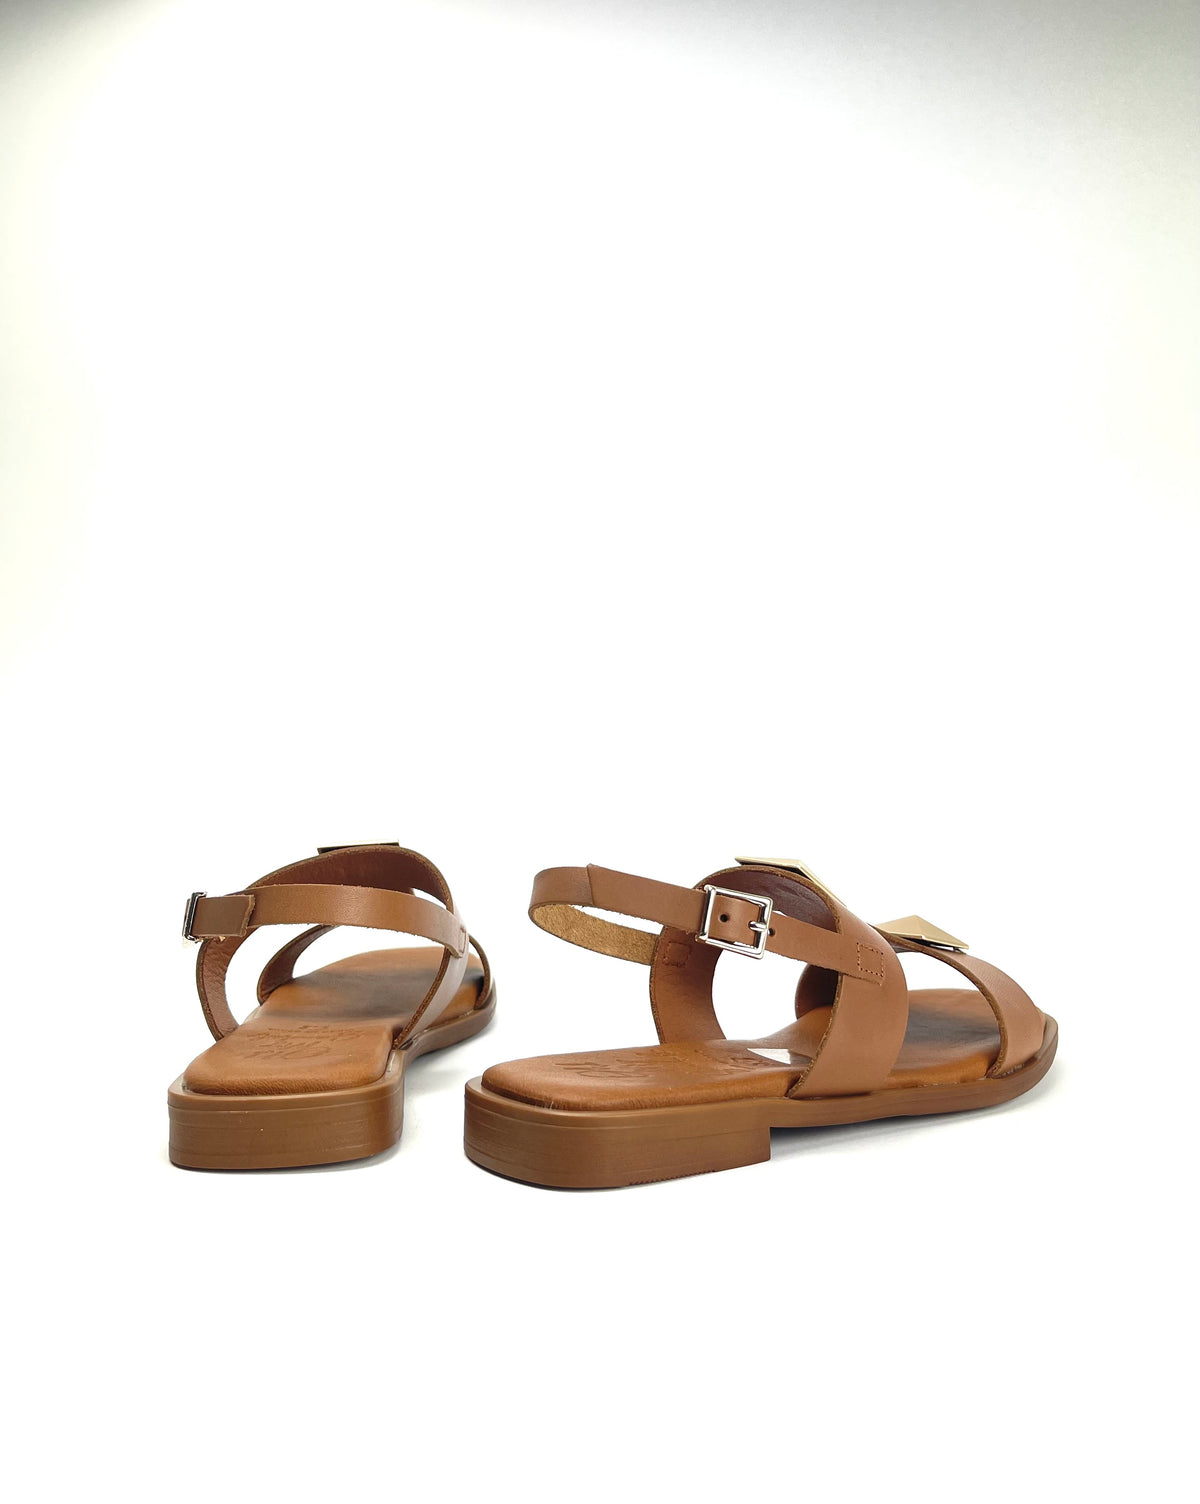 Oh My Sandals - 5329 Tan Stud Sandal